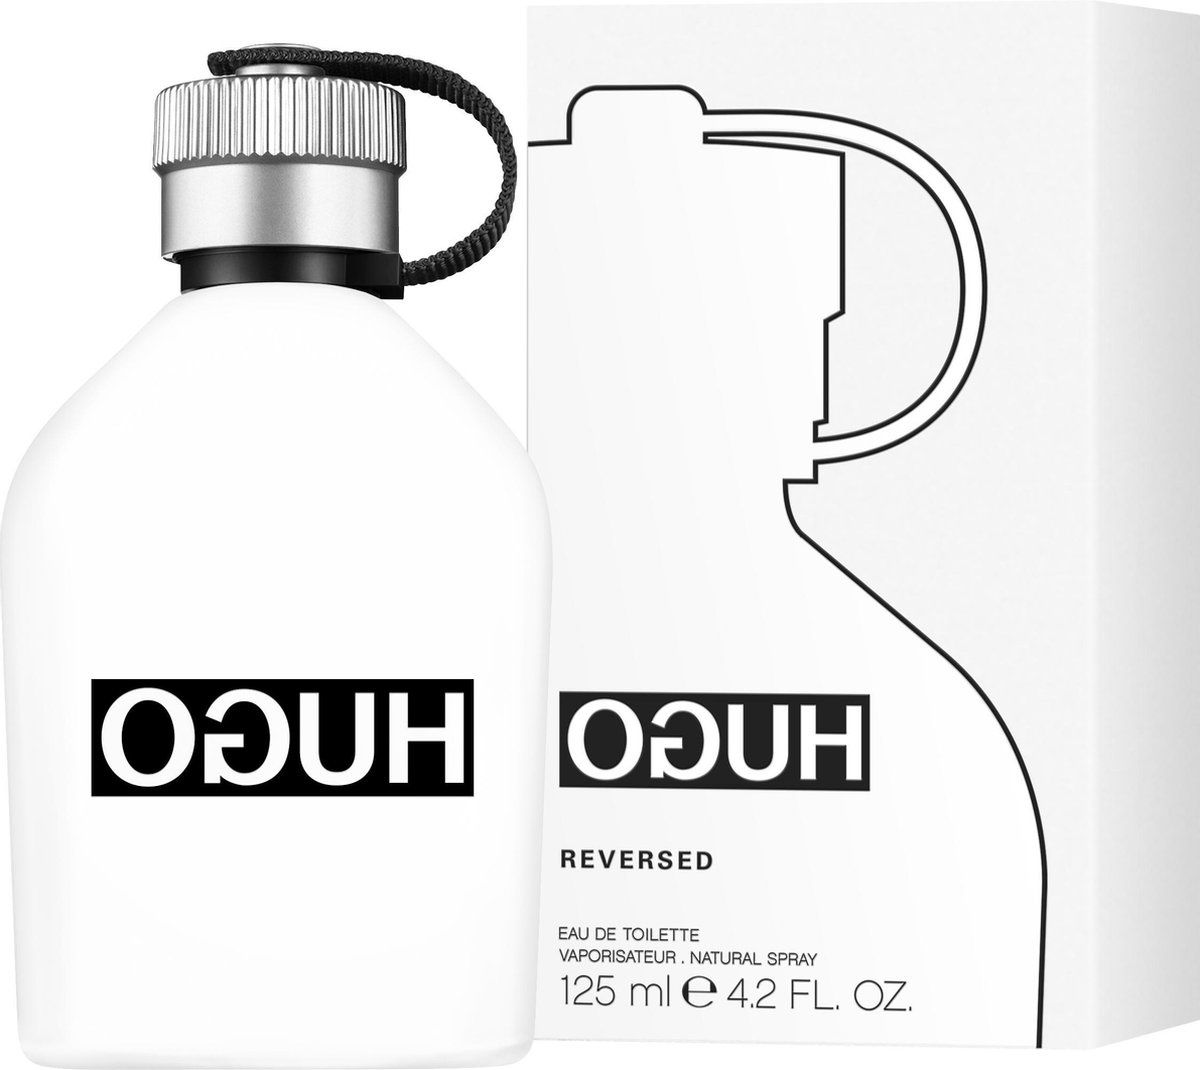 Hugo Boss Reversed 125 ml - Eau de Toilette - Men's Perfume